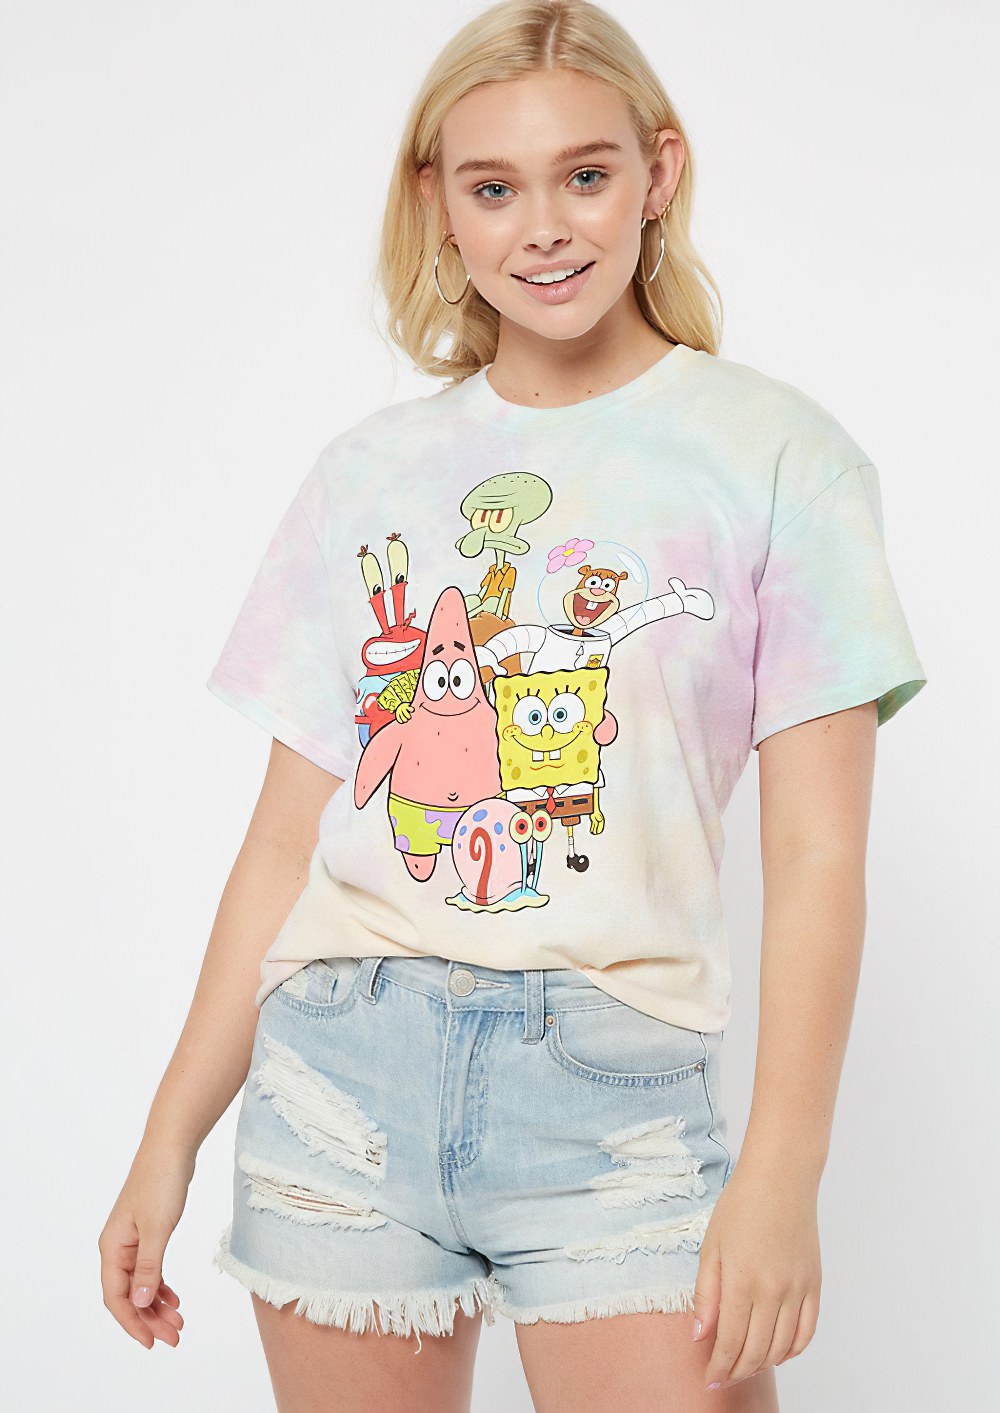 Gangster Spongebob Esponja With Friends 3d Shirt Full Size Up To 5xl